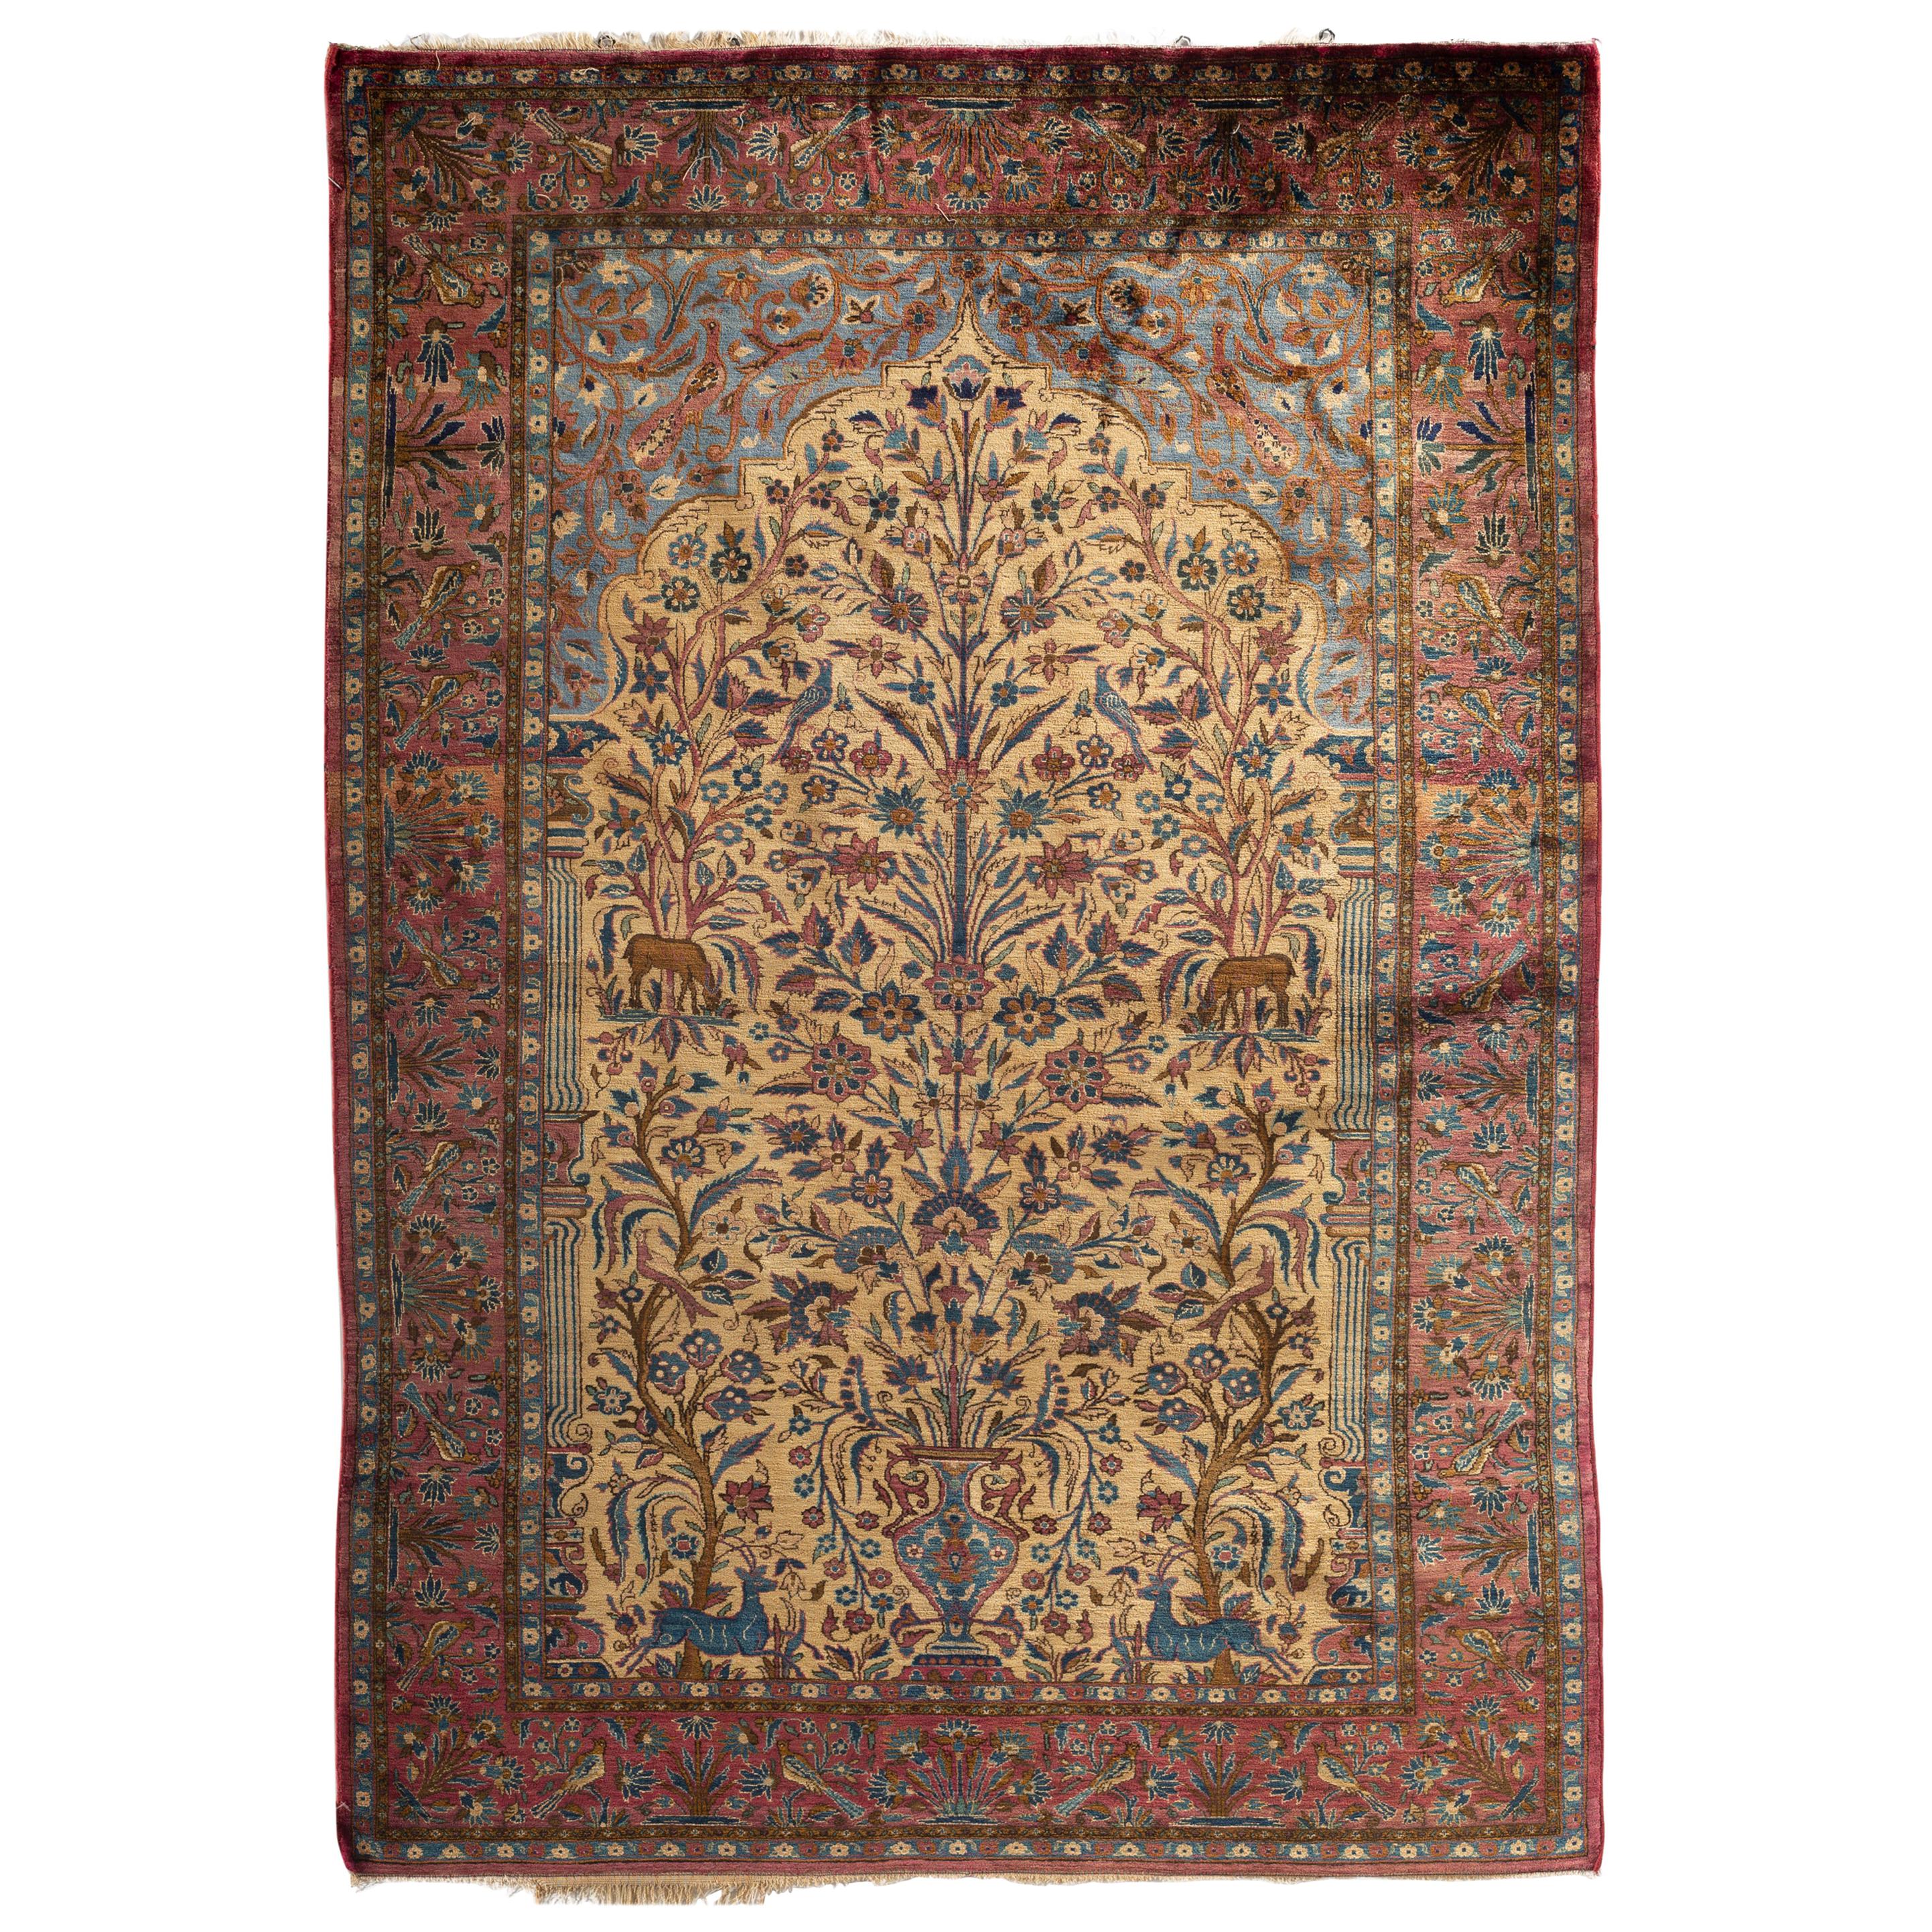 What is Kashan rug?